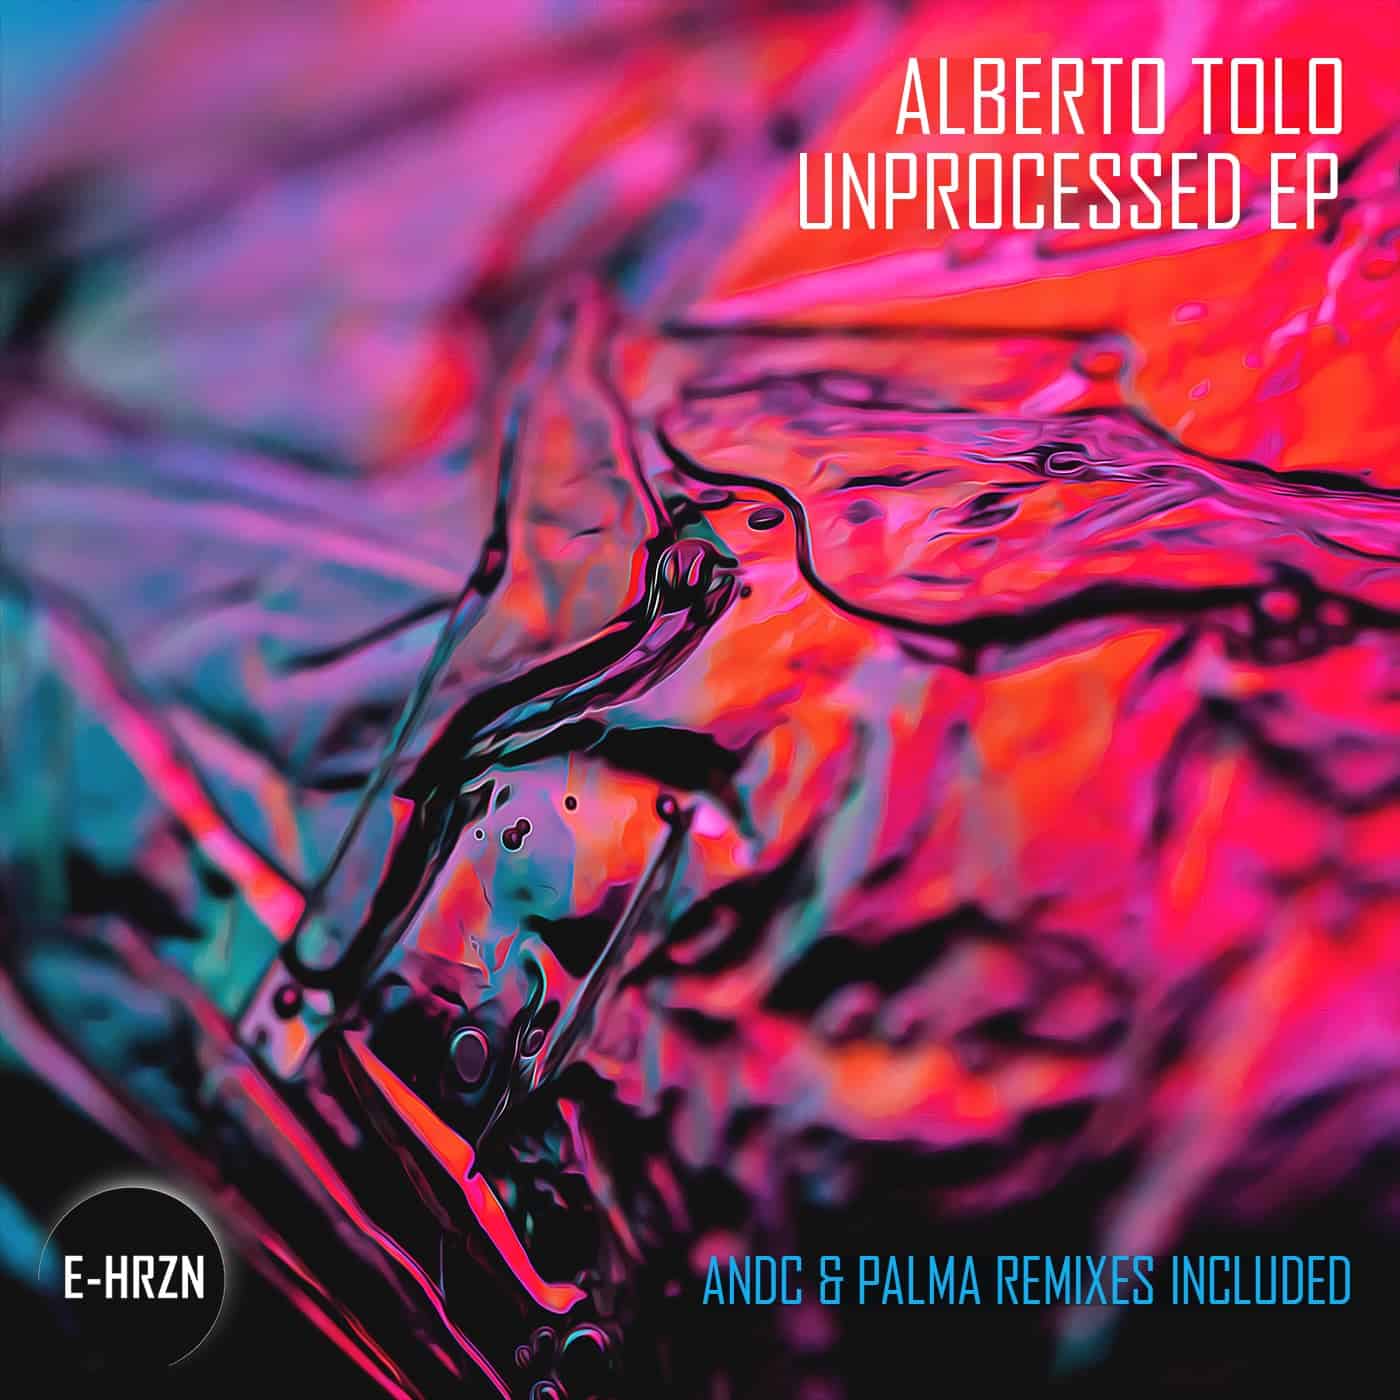 Download Alberto Tolo, Andc, Palma - UNPROCESSED EP on Electrobuzz